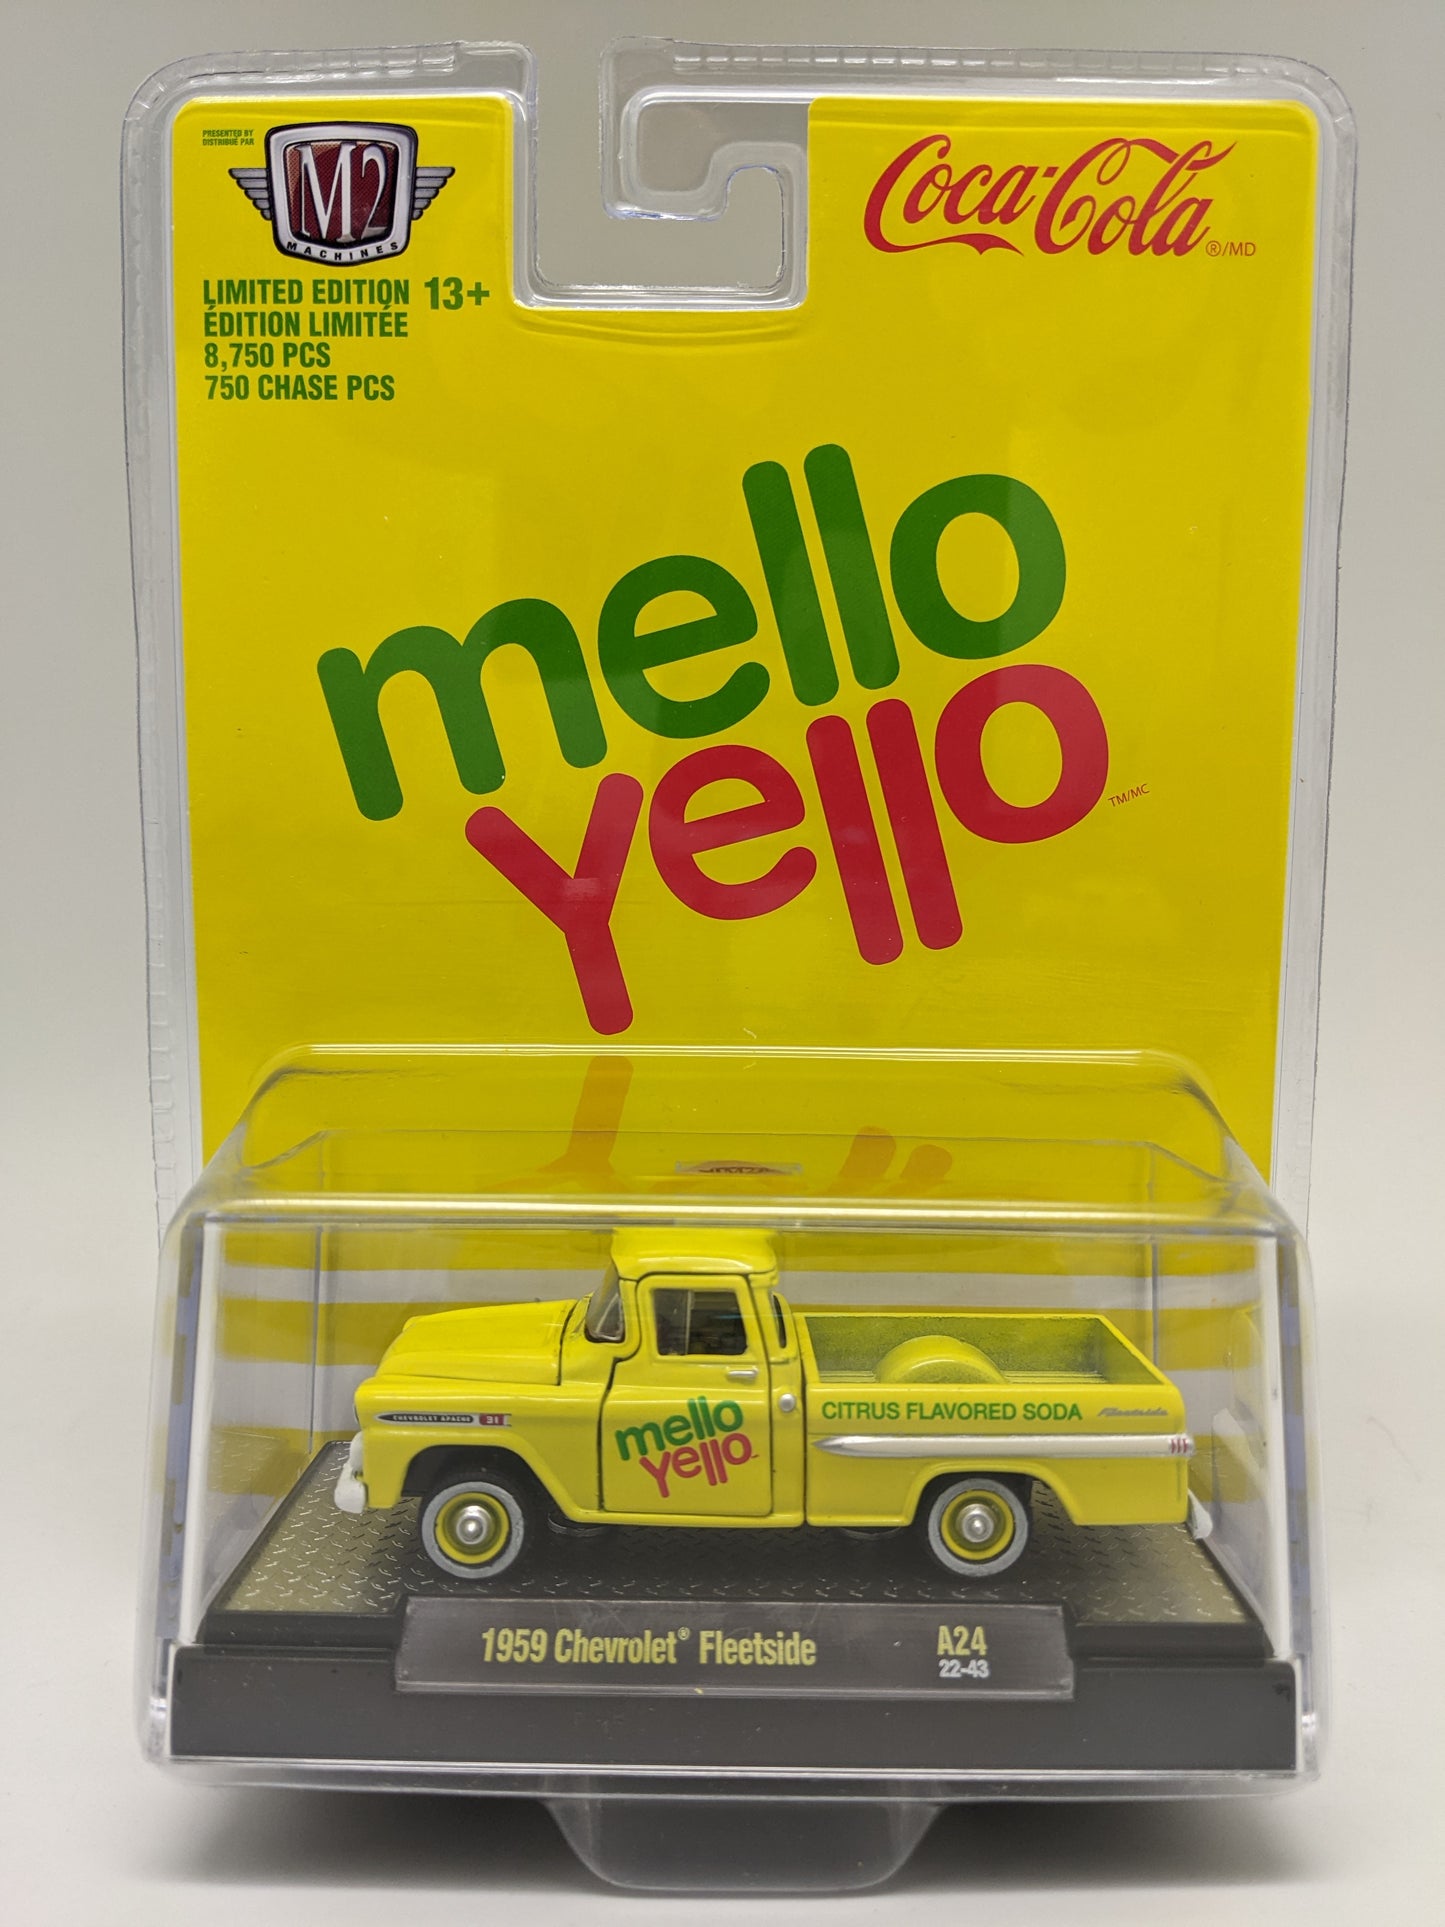 M2 1959 Chevrolet Fleetside - Mello Yello